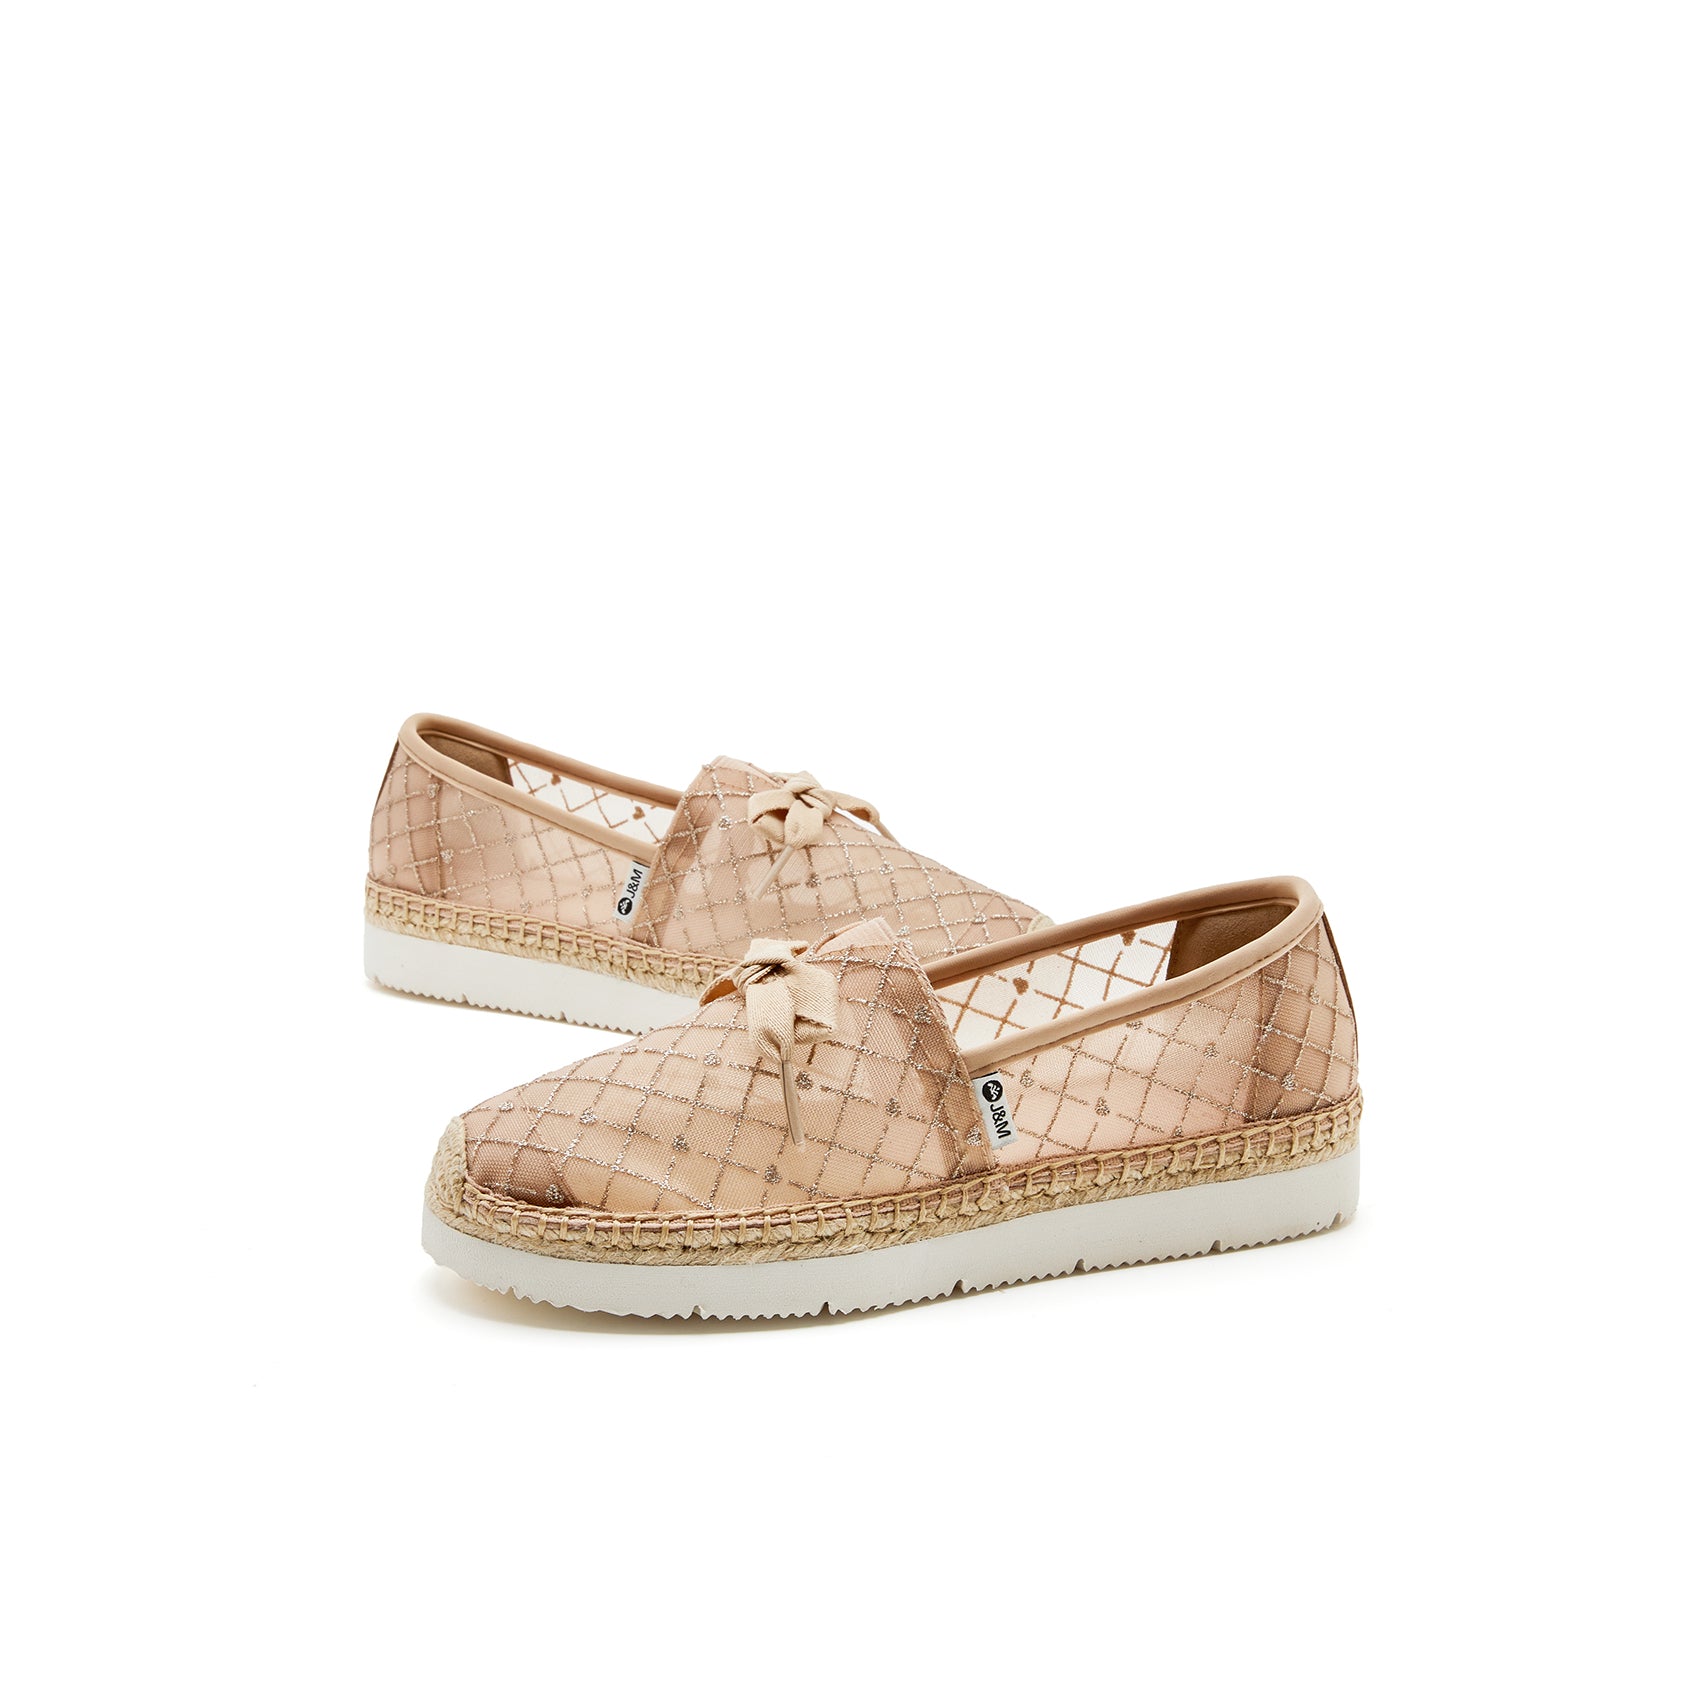 JOY&MARIO Handmade Women’s Slip-On Espadrille Mesh Loafers Platform in Apricot-52106W